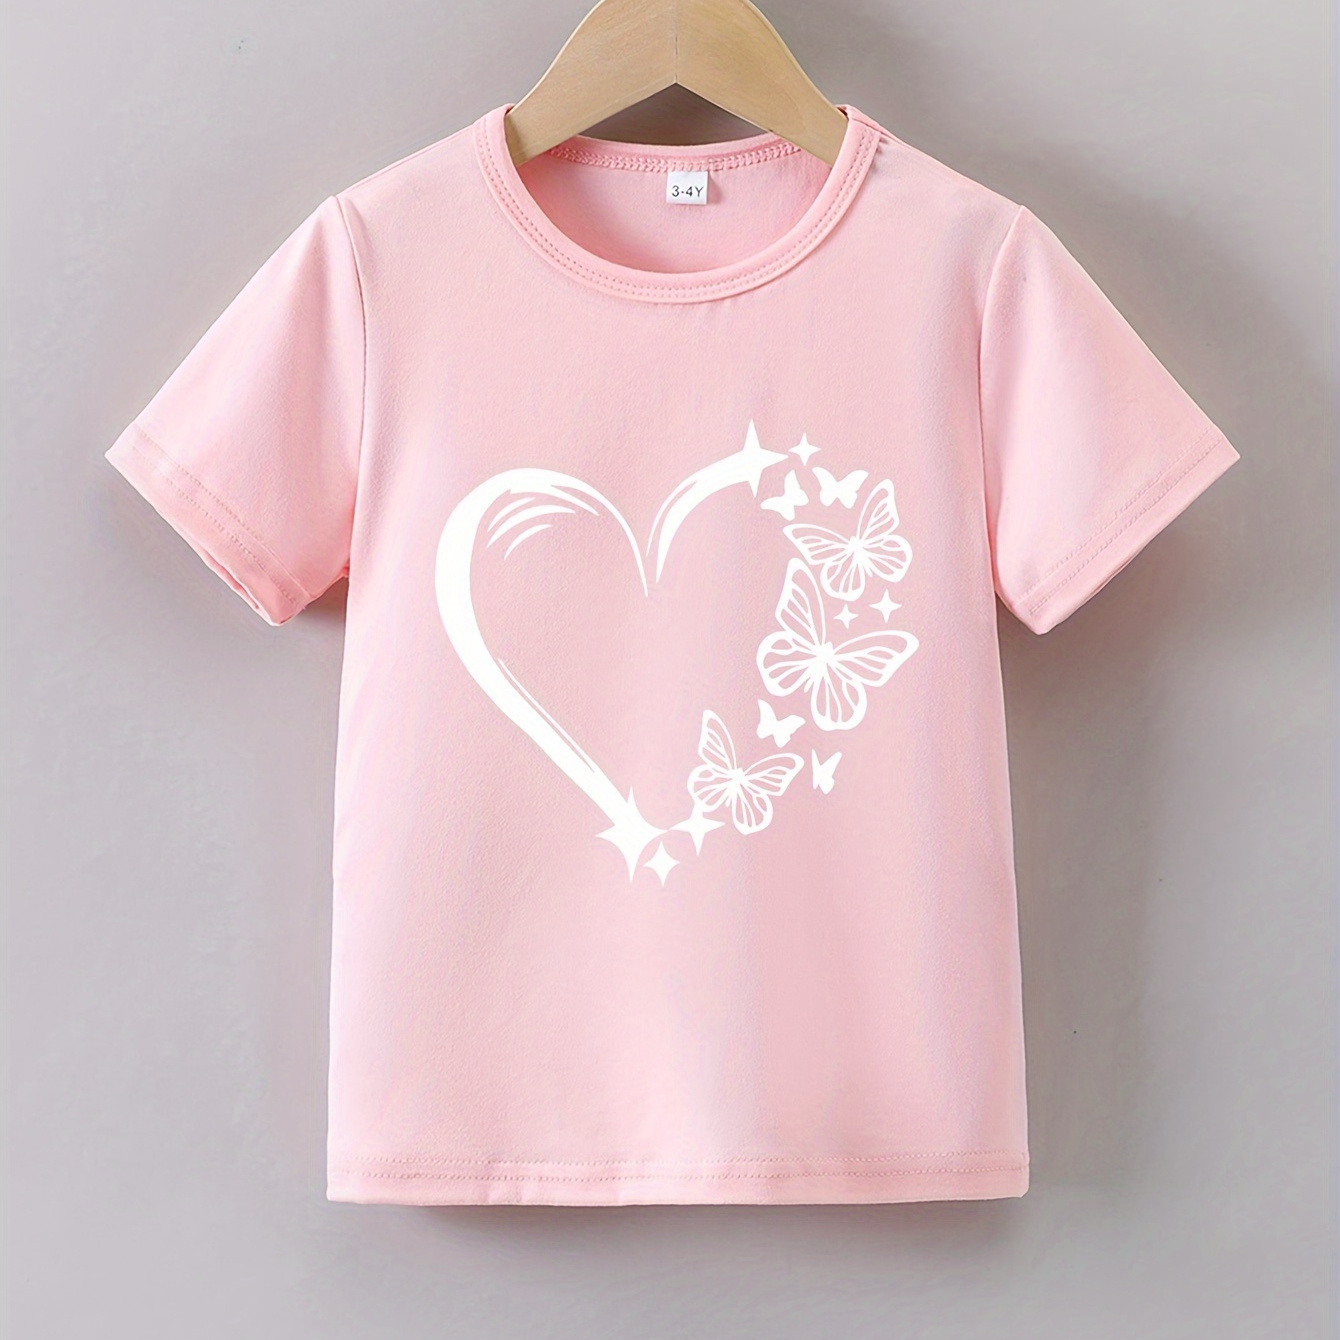 

Heart Graphic Print Creative T-shirts, Soft & Elastic Comfy Crew Neck Short Sleeve Tee, Girls' Causal Summer Tops